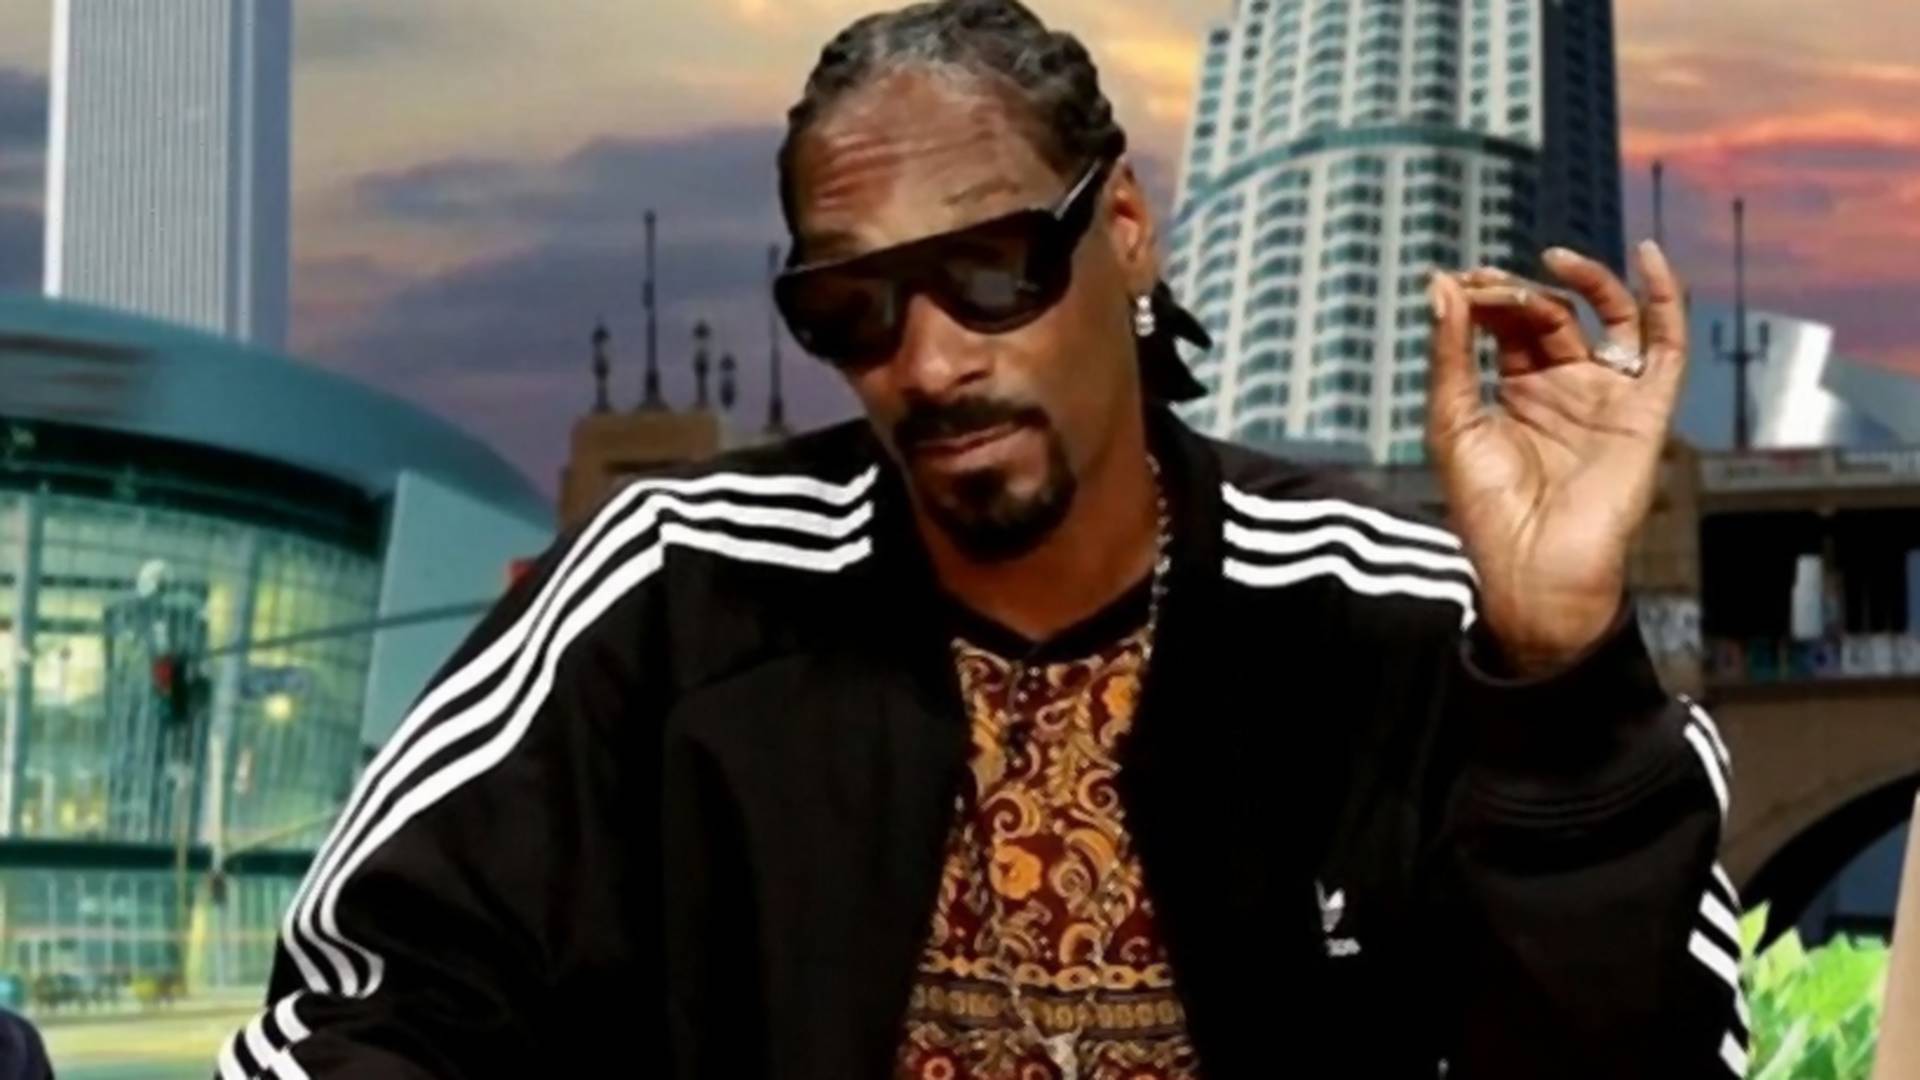 Snoop Dogg pripalio džoint ispred Bele kuće, pa isprozivao Trampa